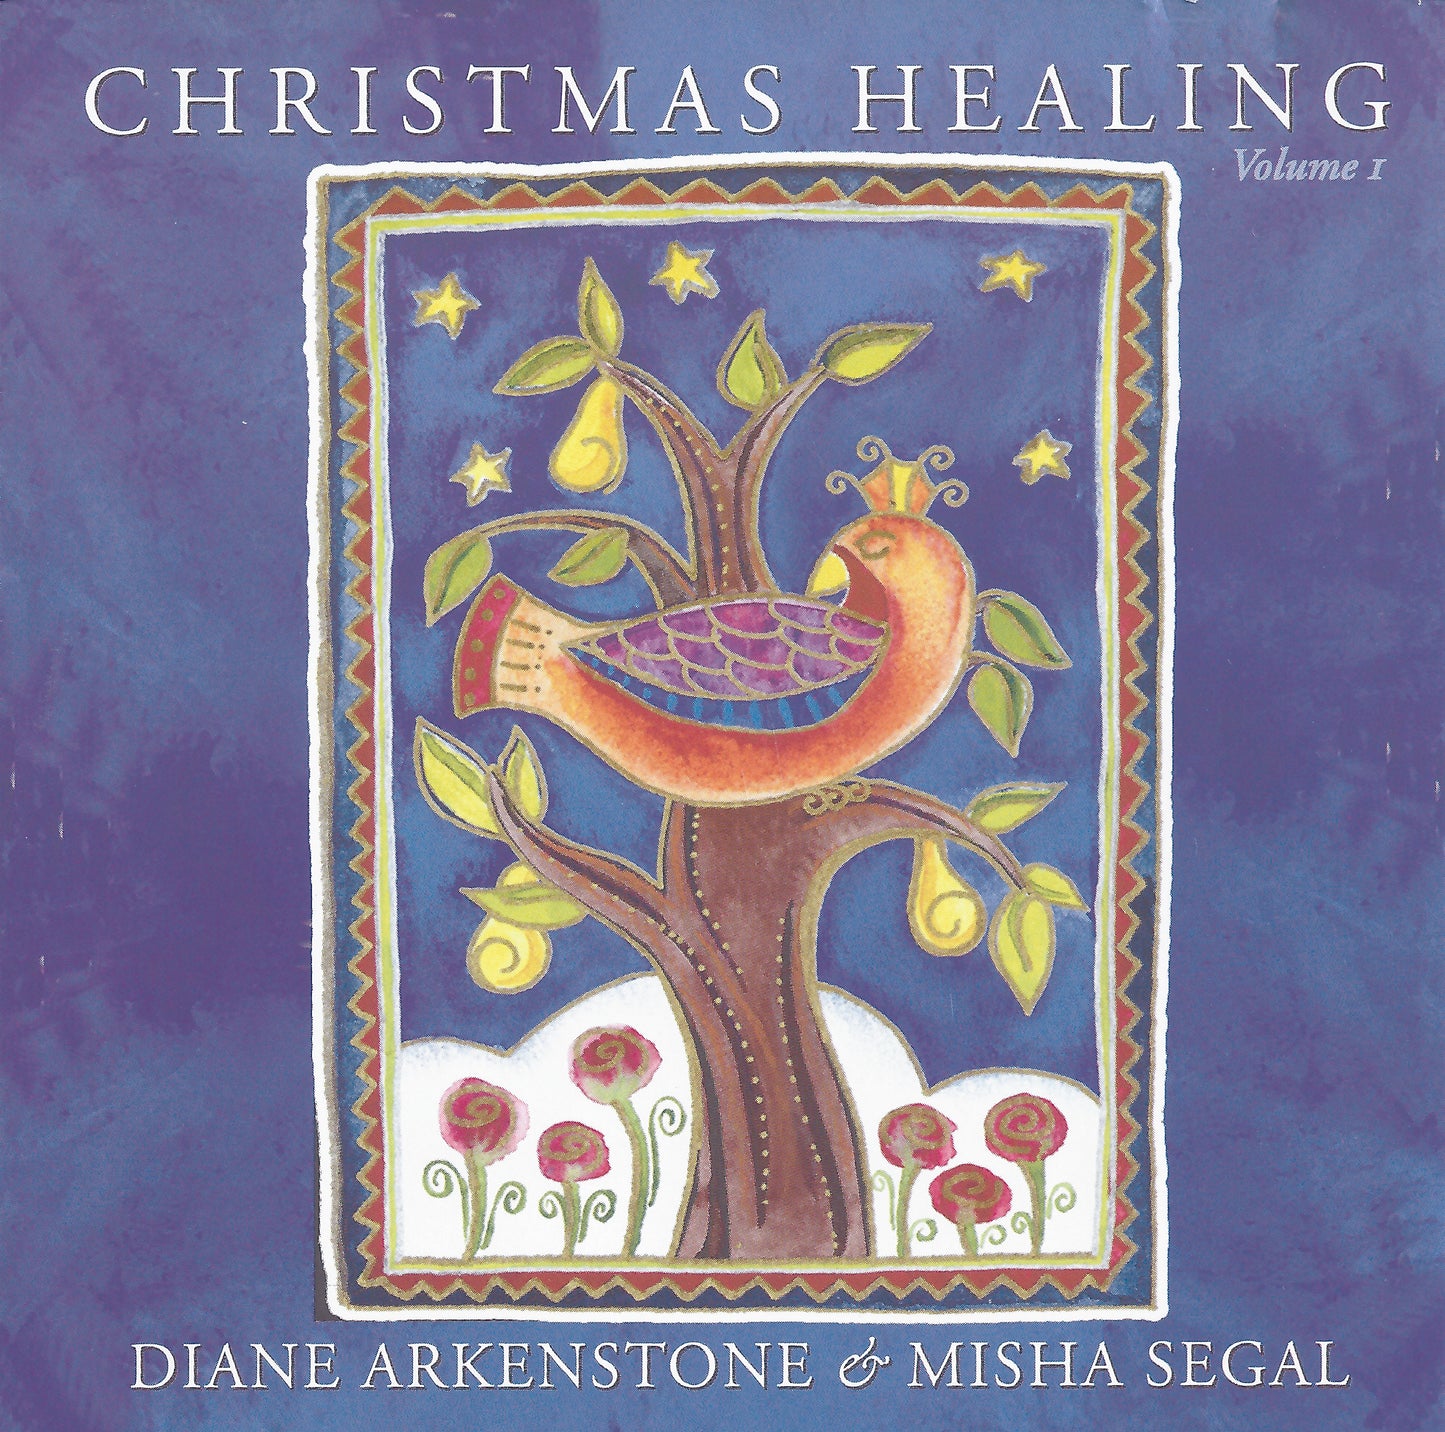 O Christmas Tree - Diane Arkenstone & Misha Segal